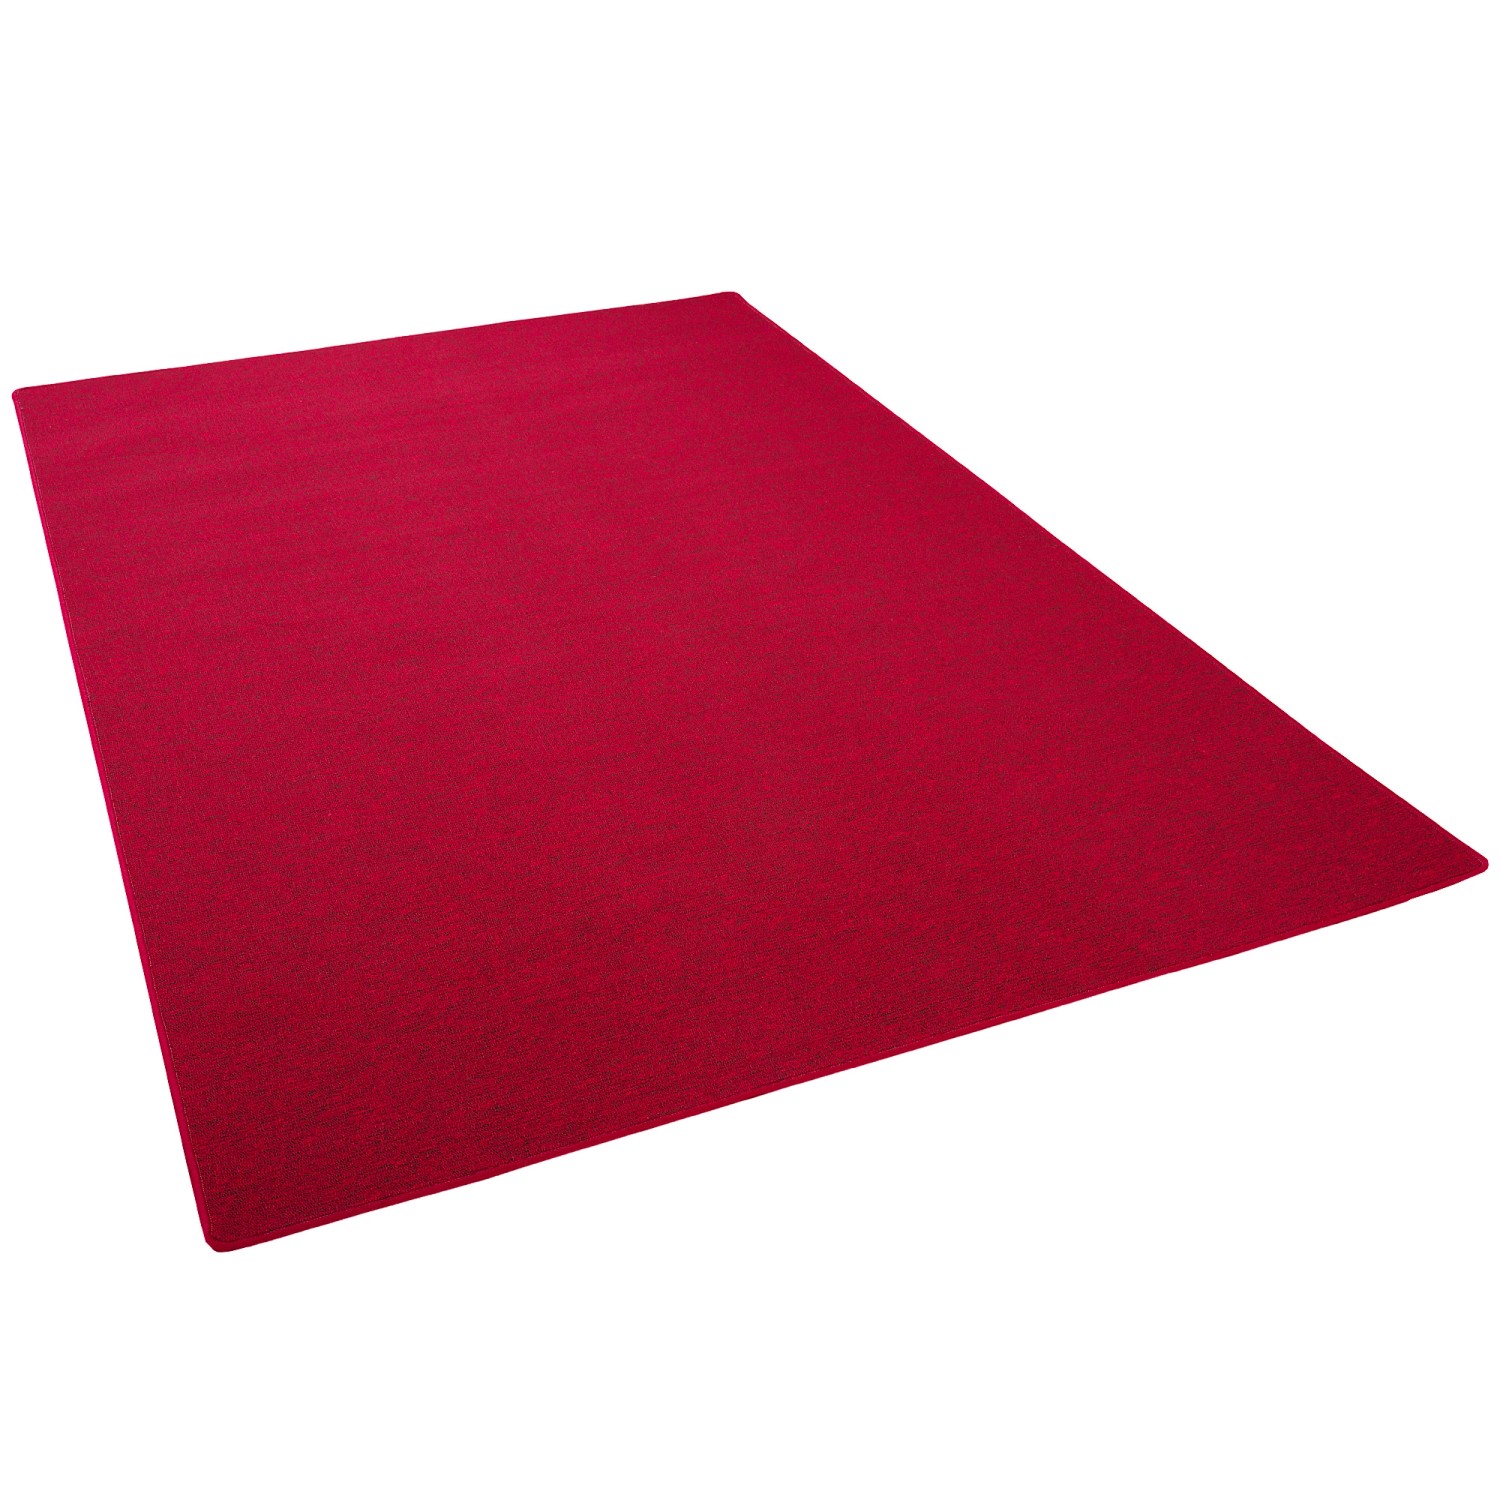 Snapstyle Feinschlingen Velour Teppich Strong Rot 80x160cm günstig online kaufen